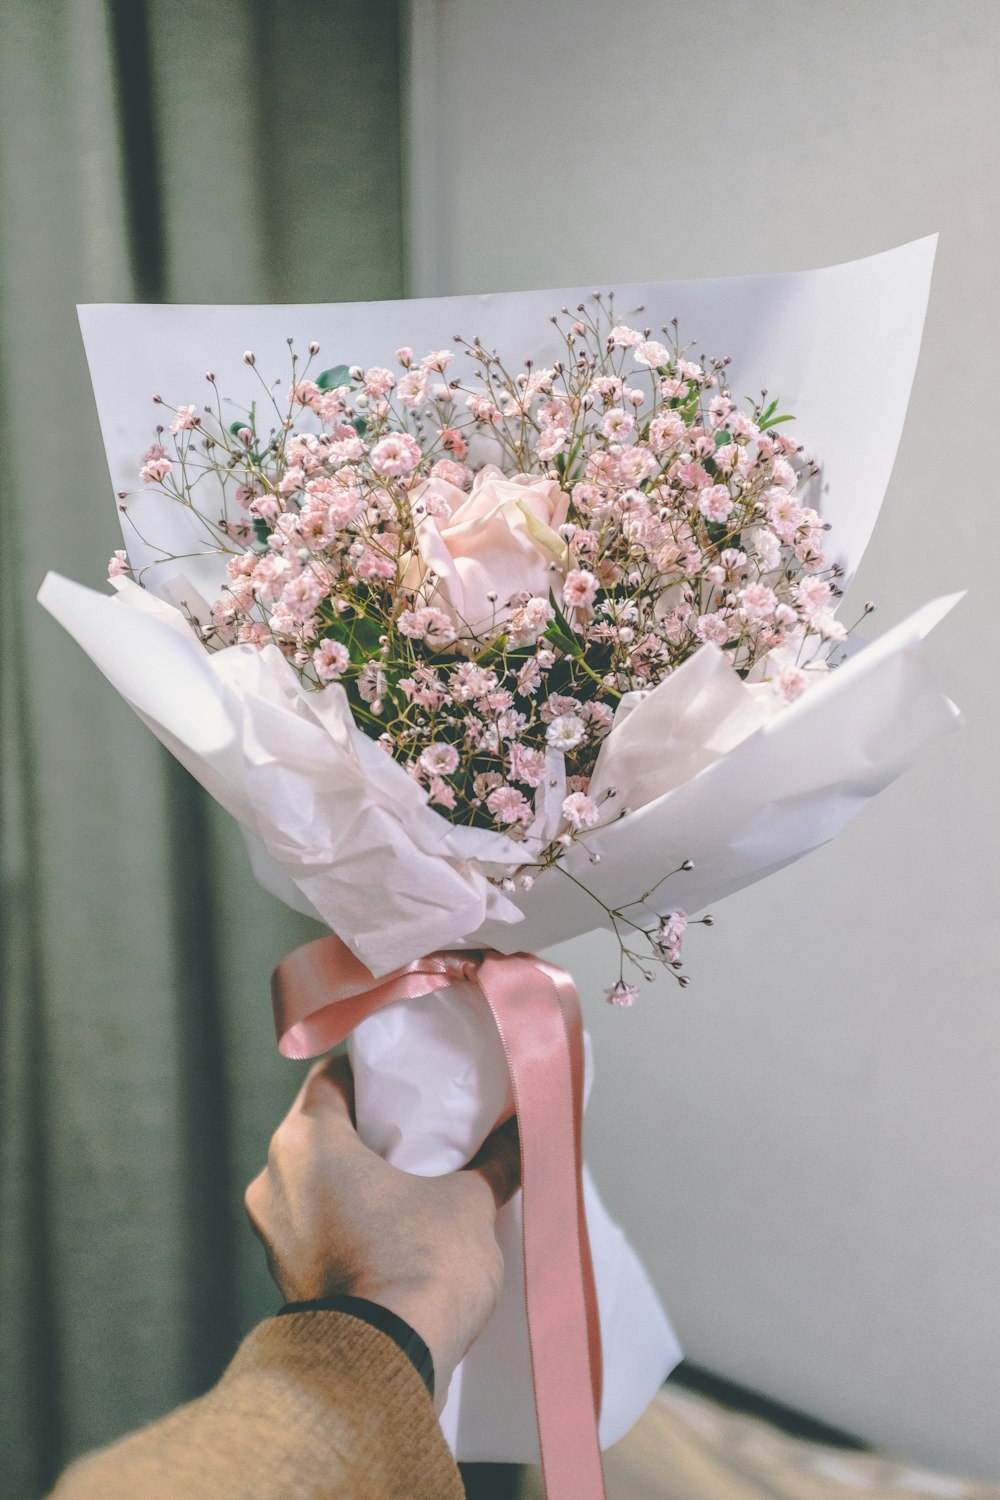 pink flowers bouquet